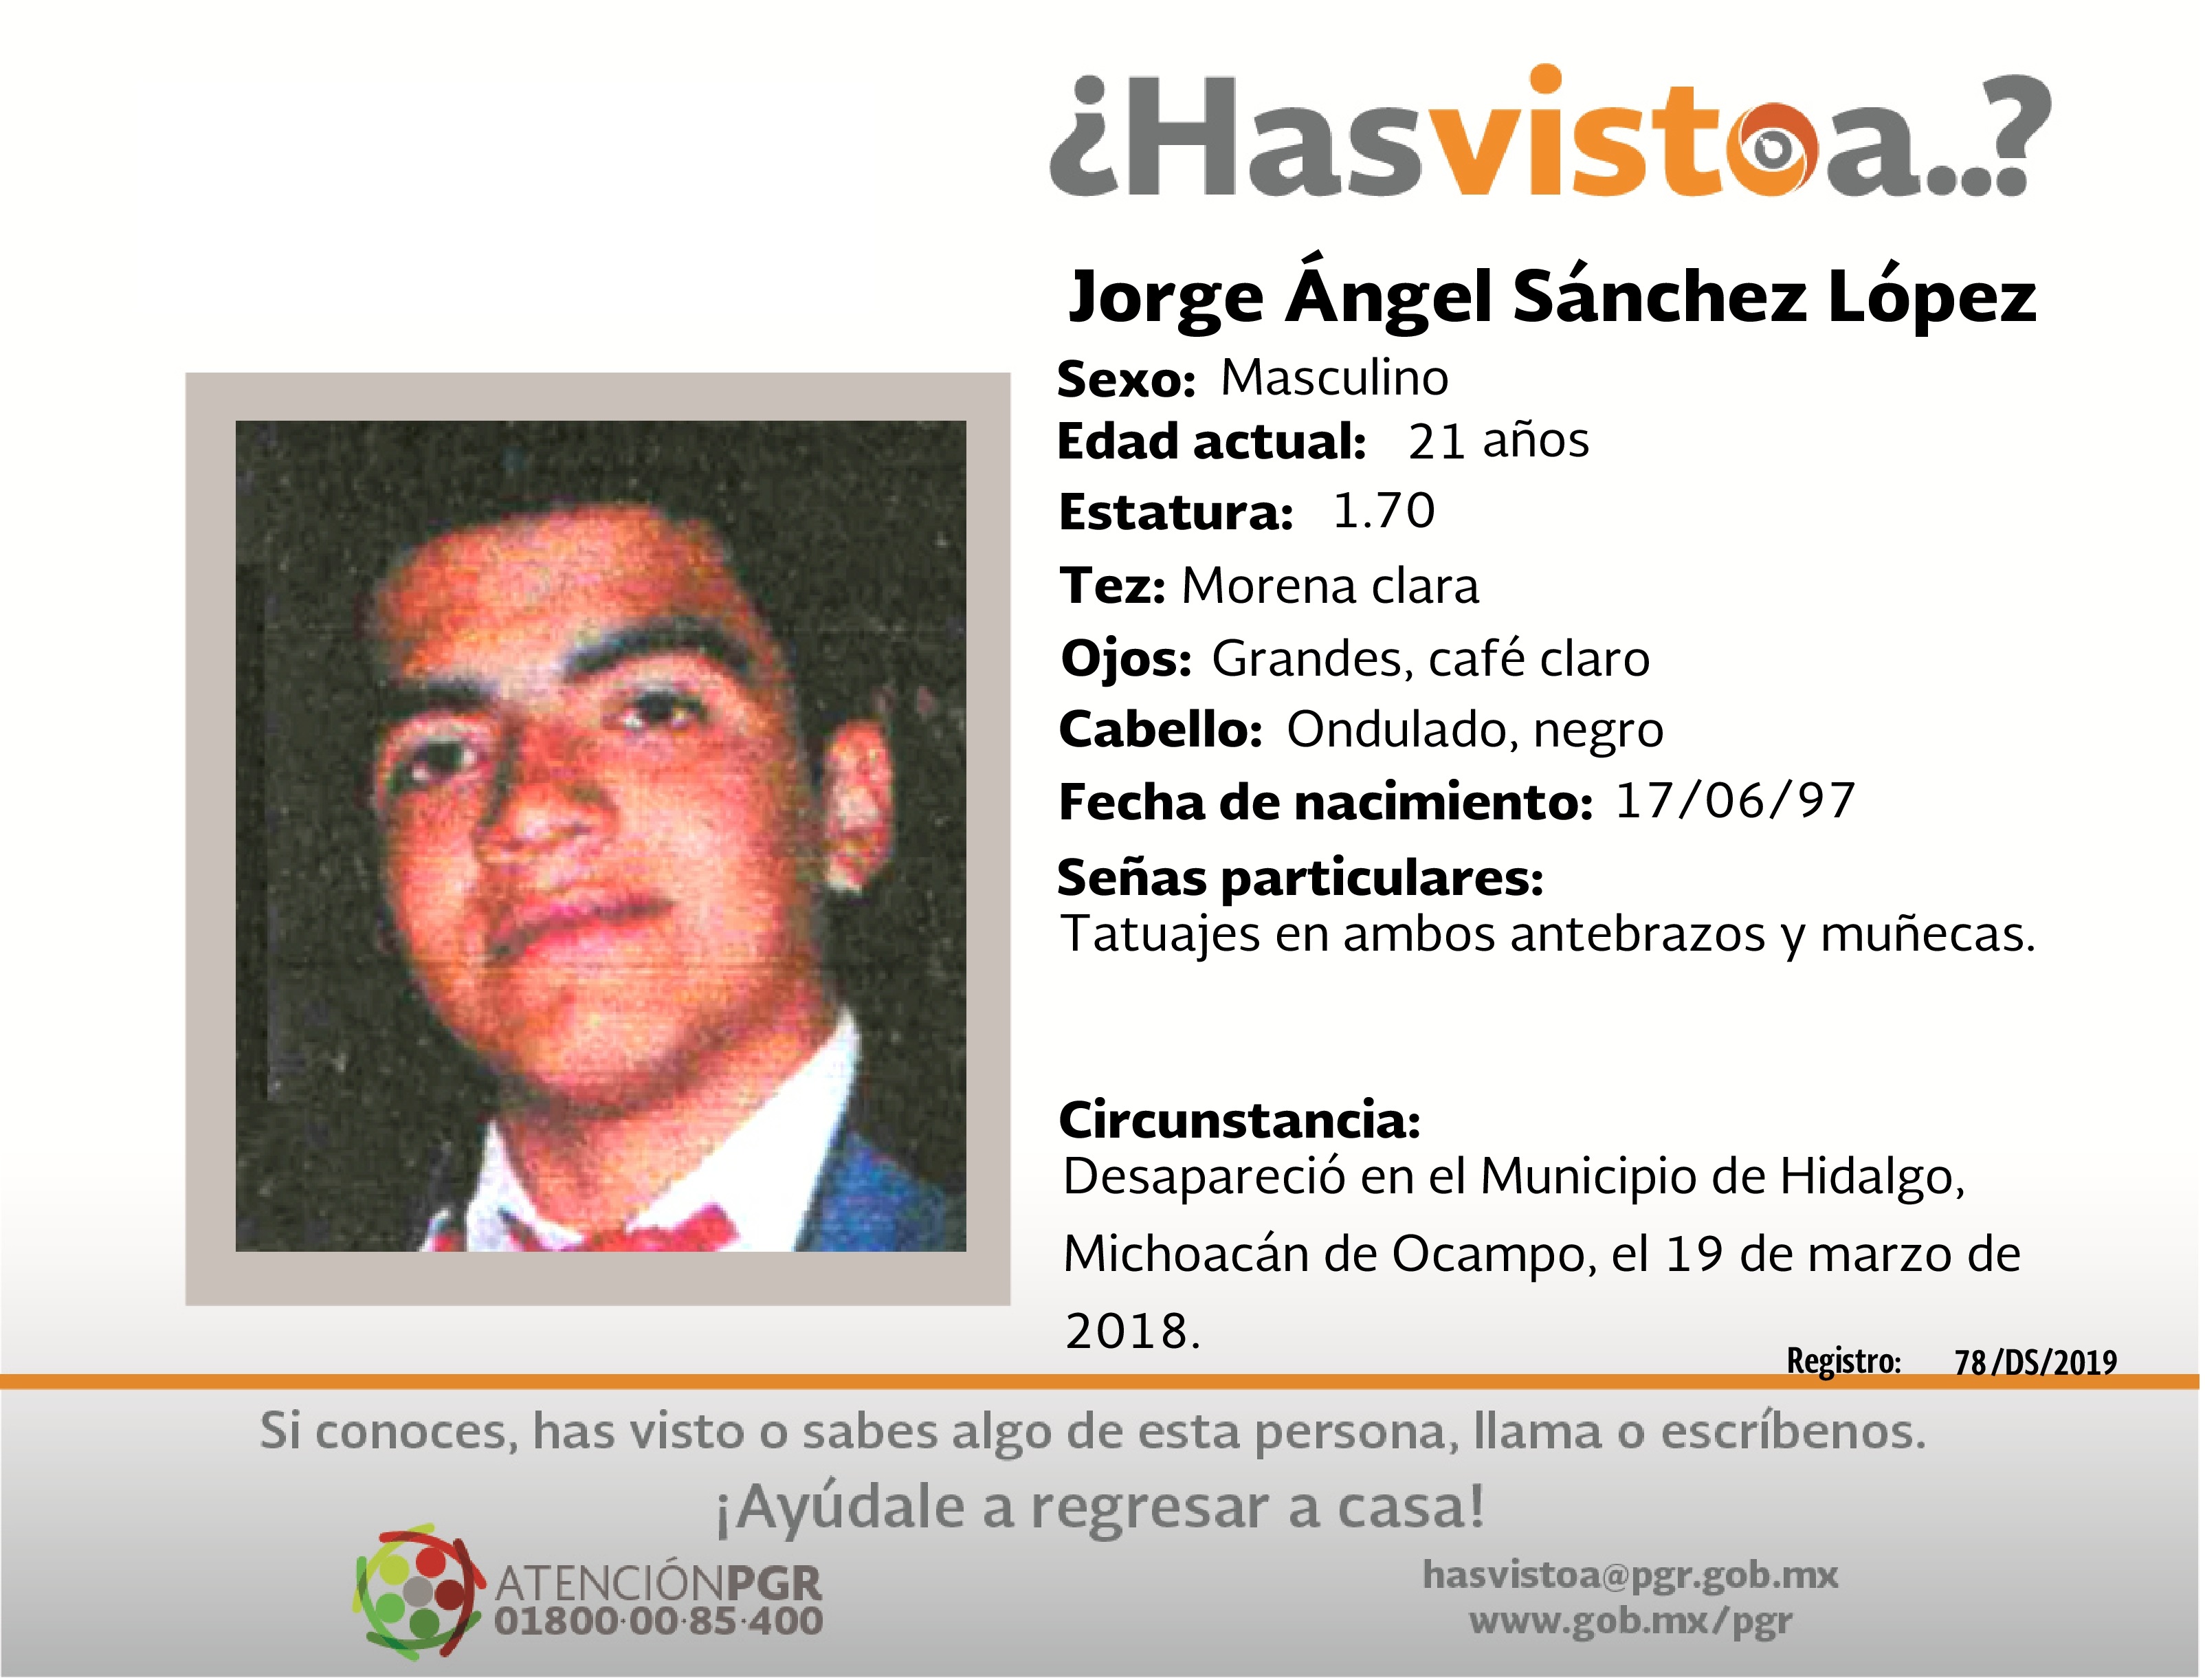 Ayúdanos a localizar a Jorge Ángel Sánchez